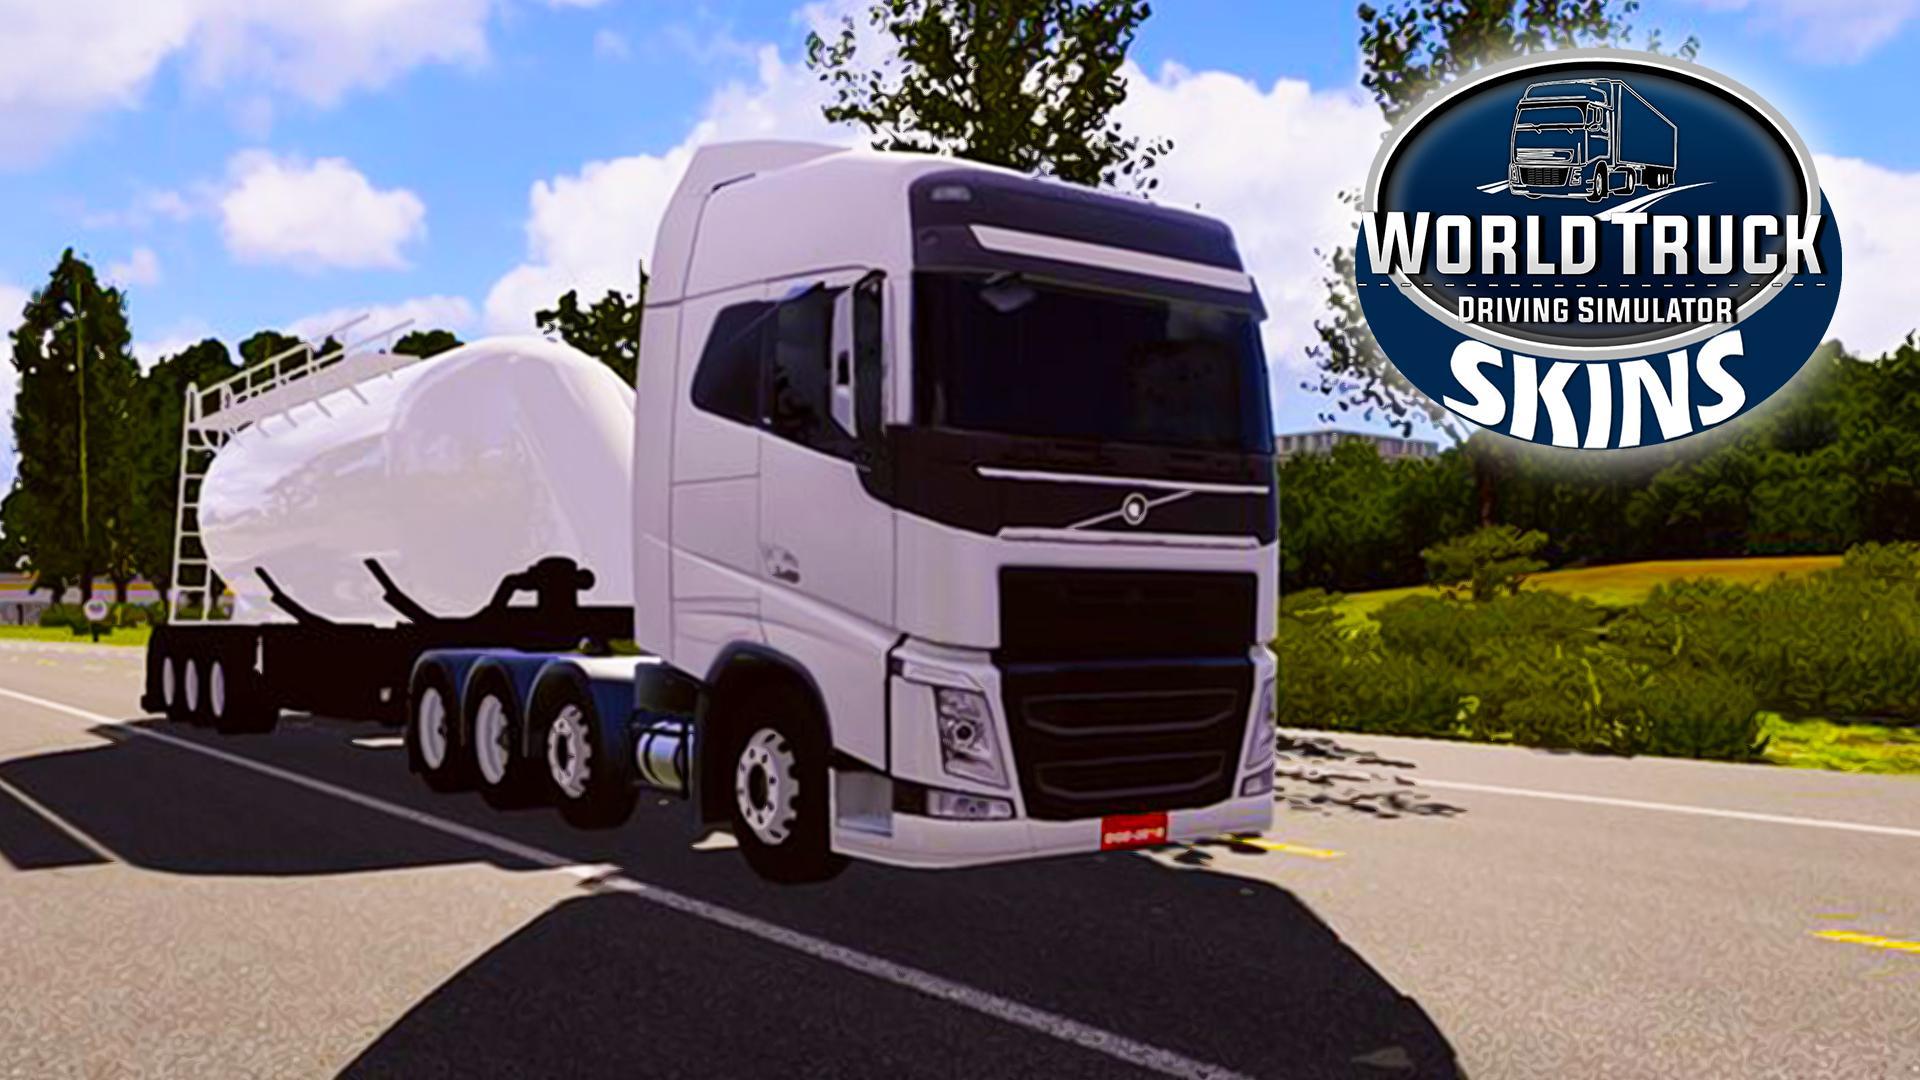 Skins World Truck Driving Simulator imagem de tela 2.